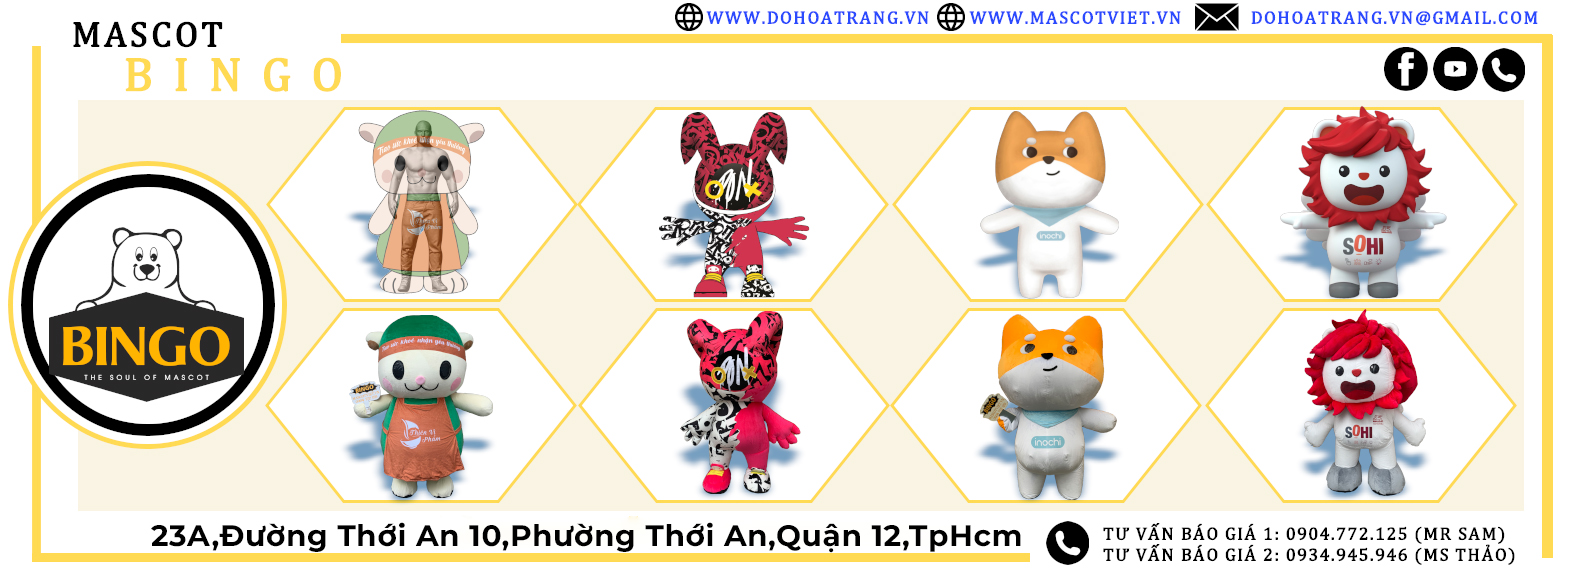 Mascot Thu Nhoi Bong